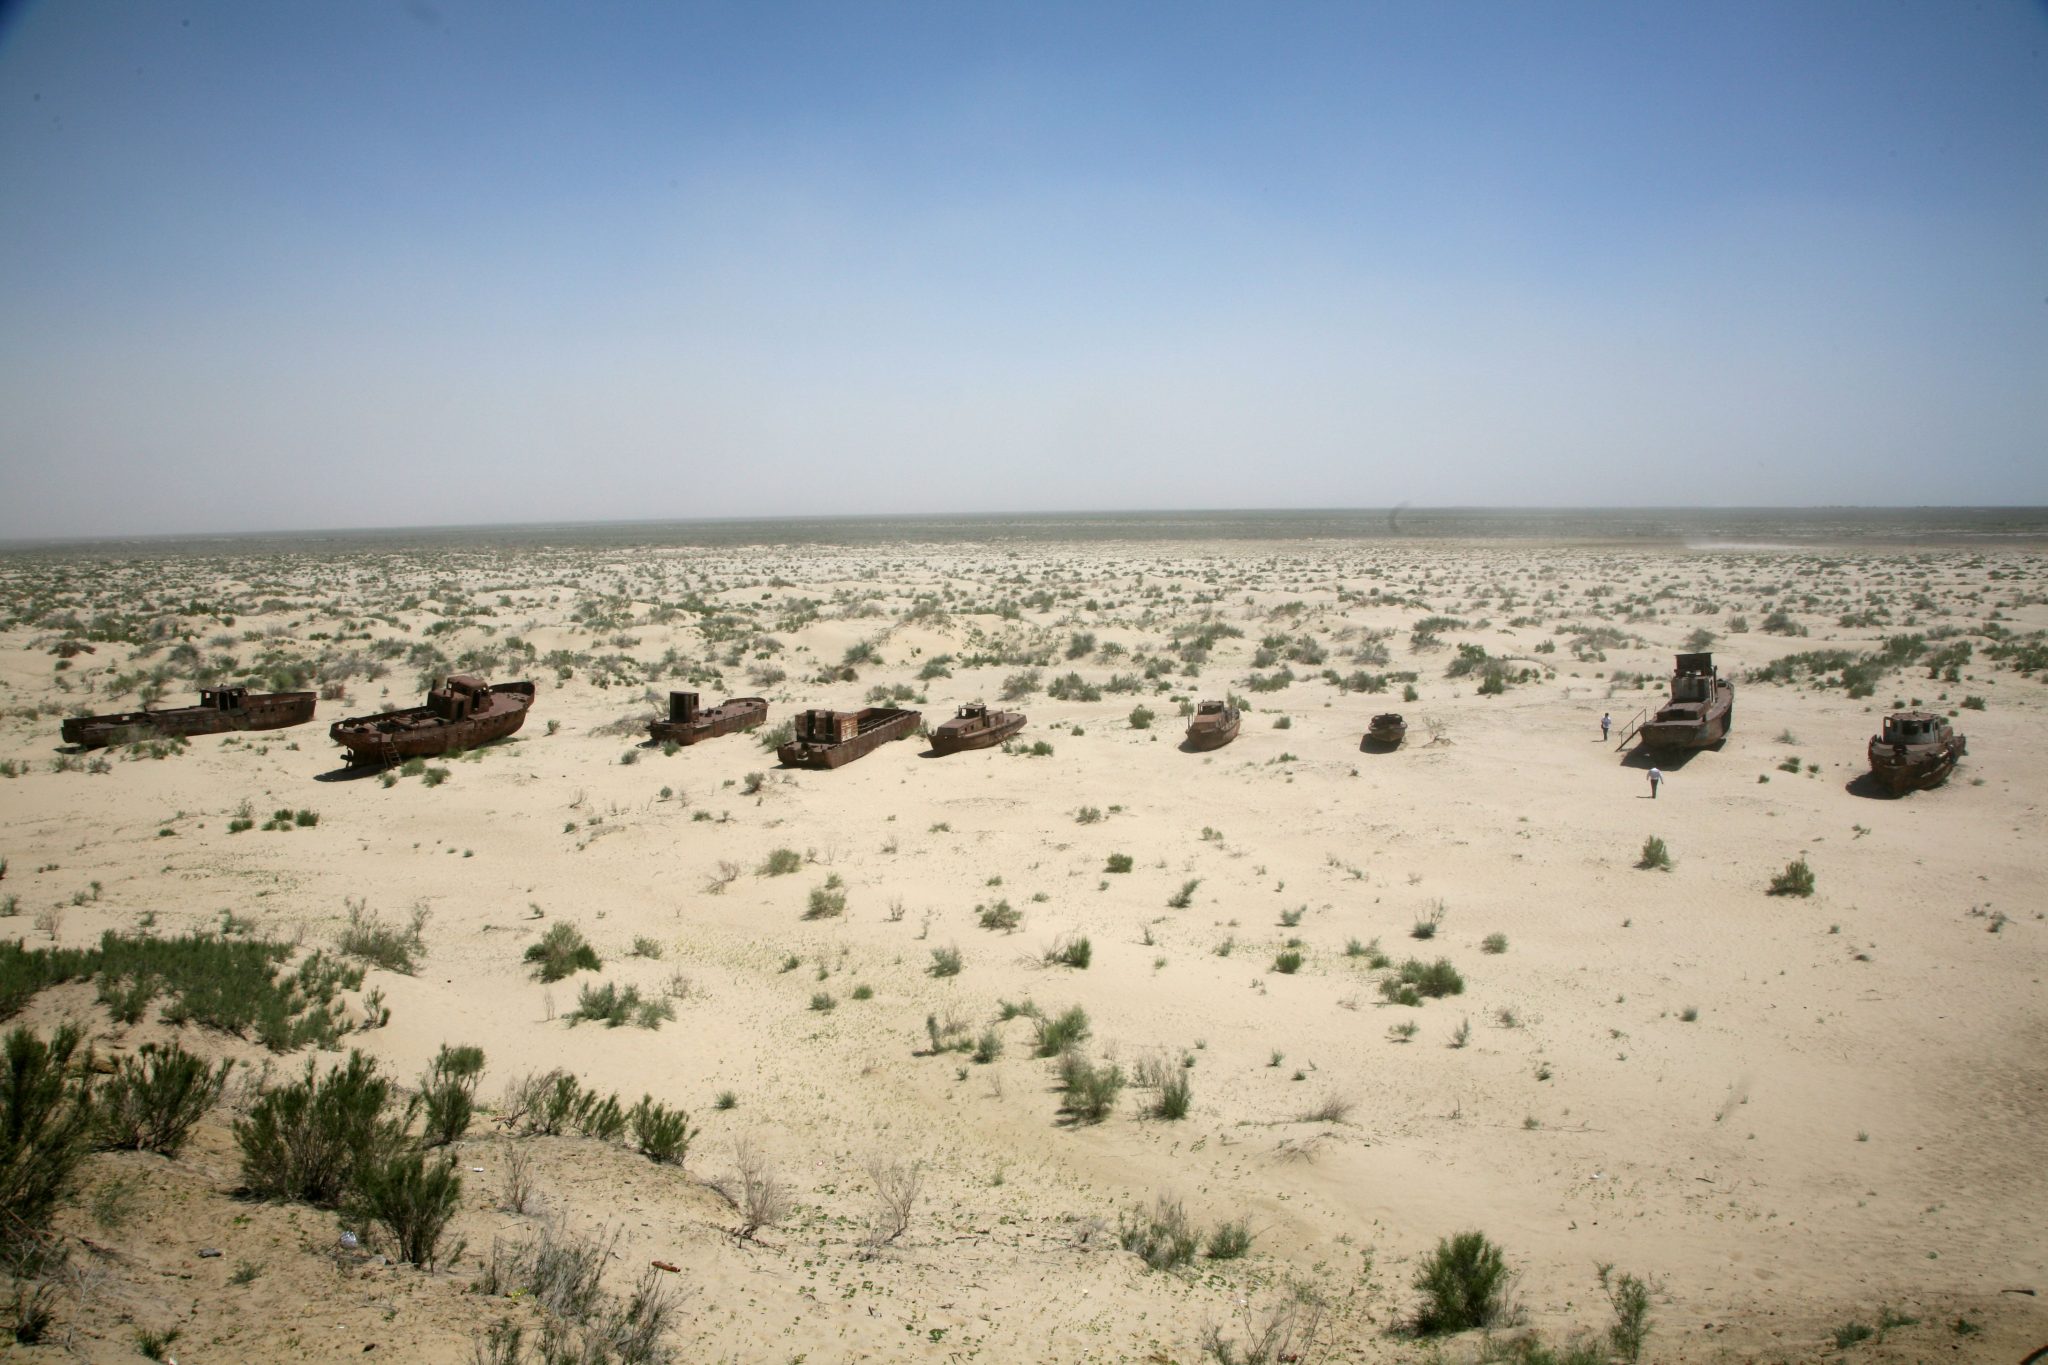 Aral Sea Basin